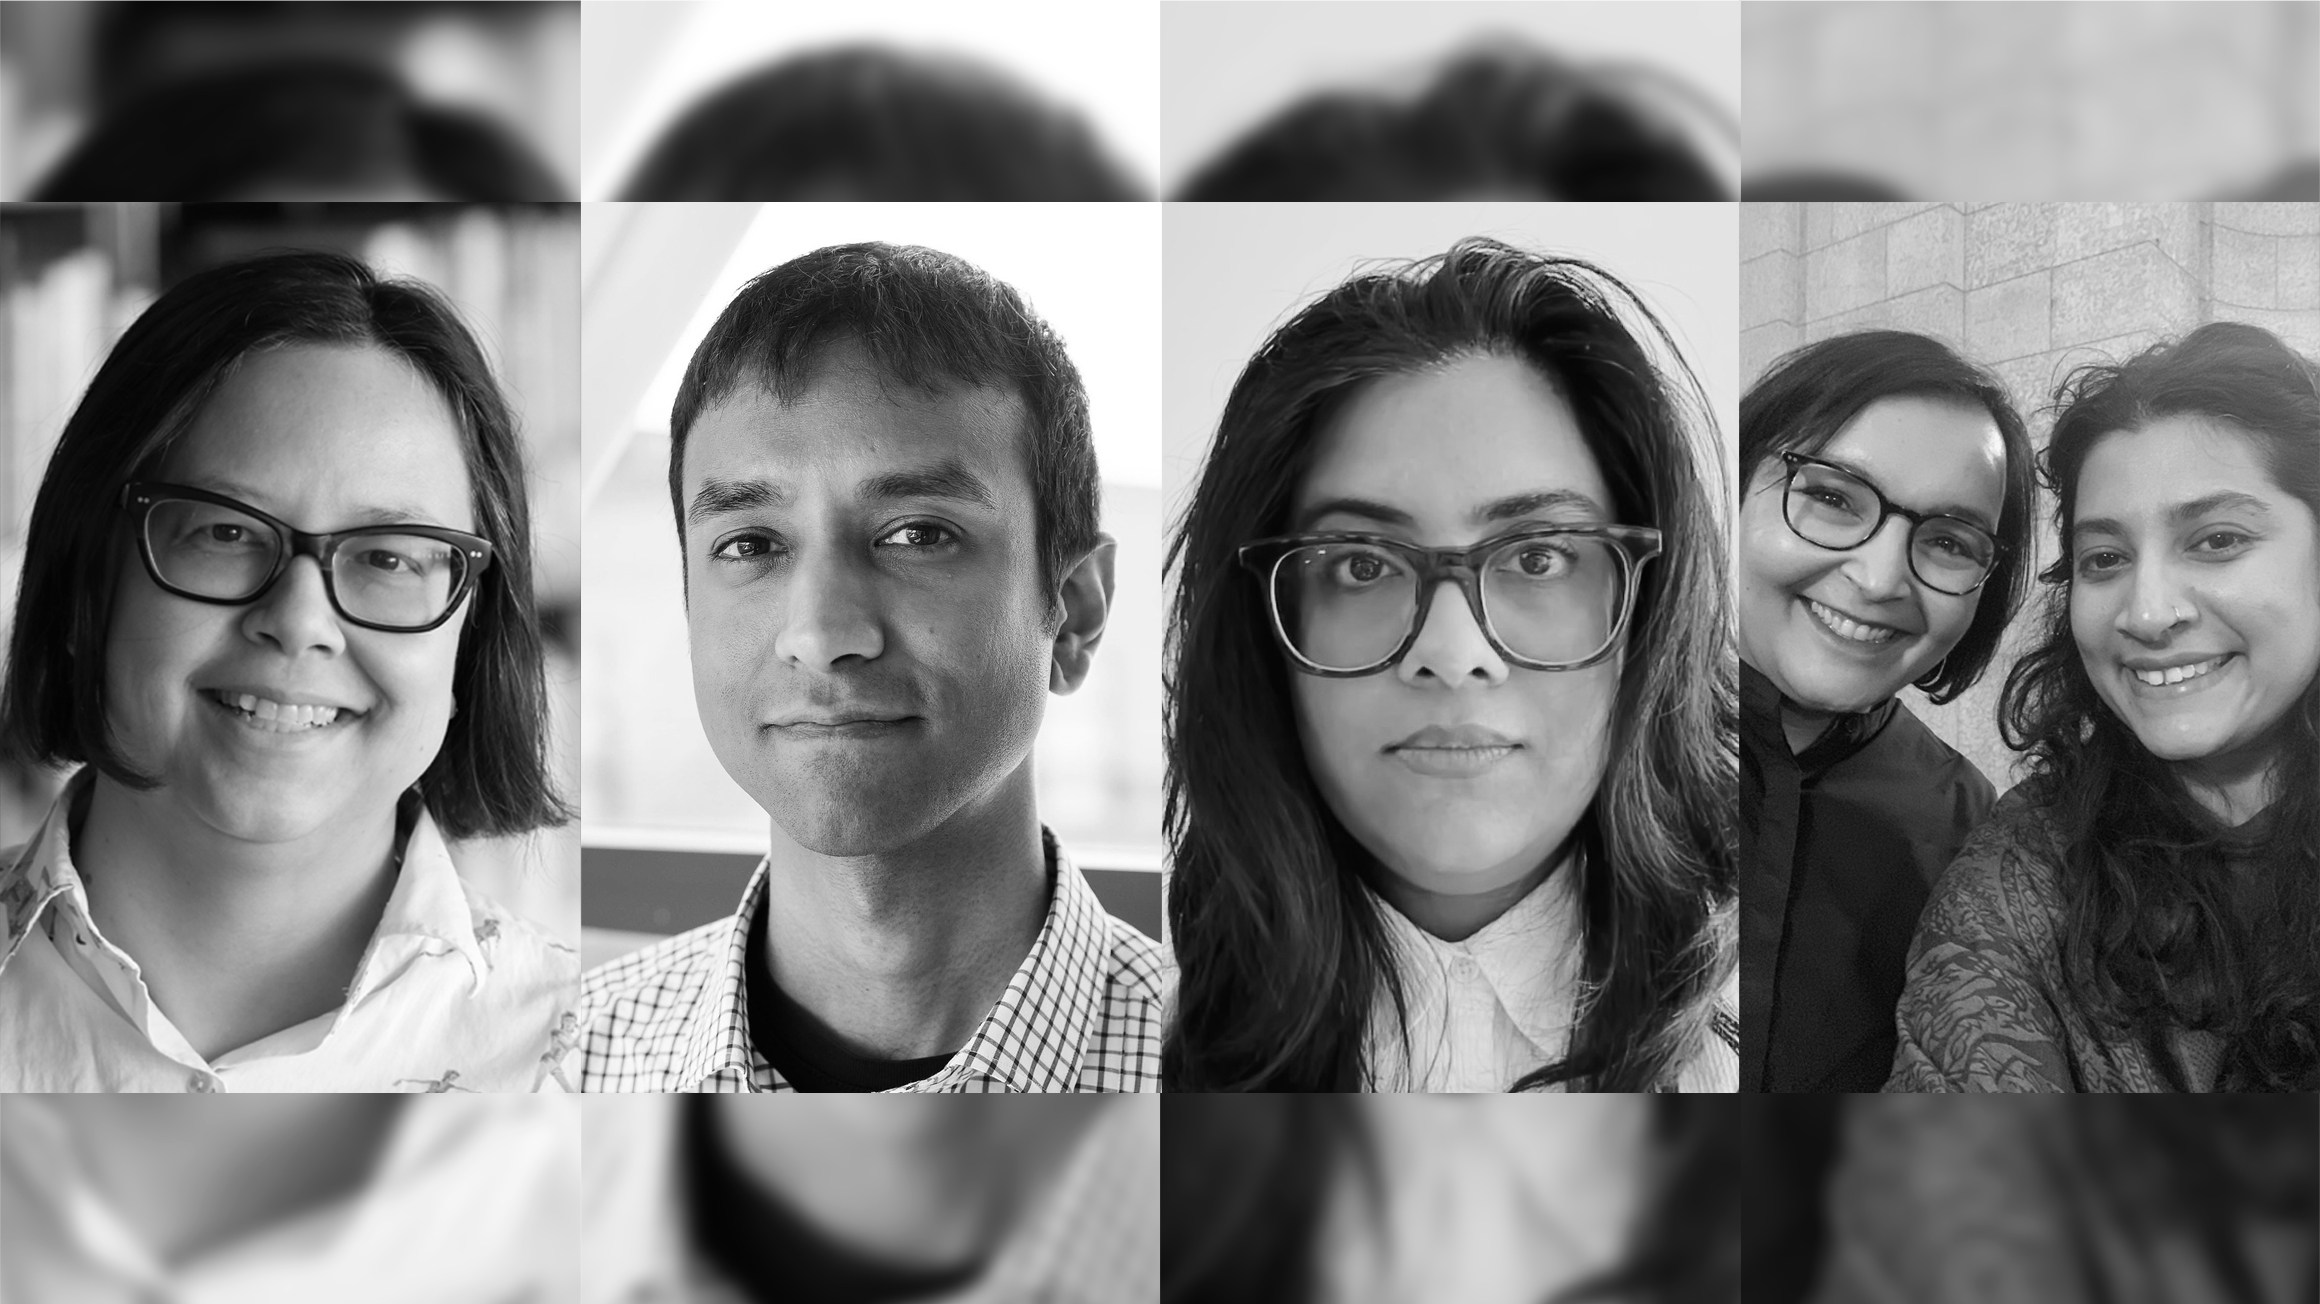 This is a black and white photo of just headshots of Larissa Wodtke, Jason Hannan, Farra Yasin, Sharanpal Ruprai, and Zabeen Khamisa